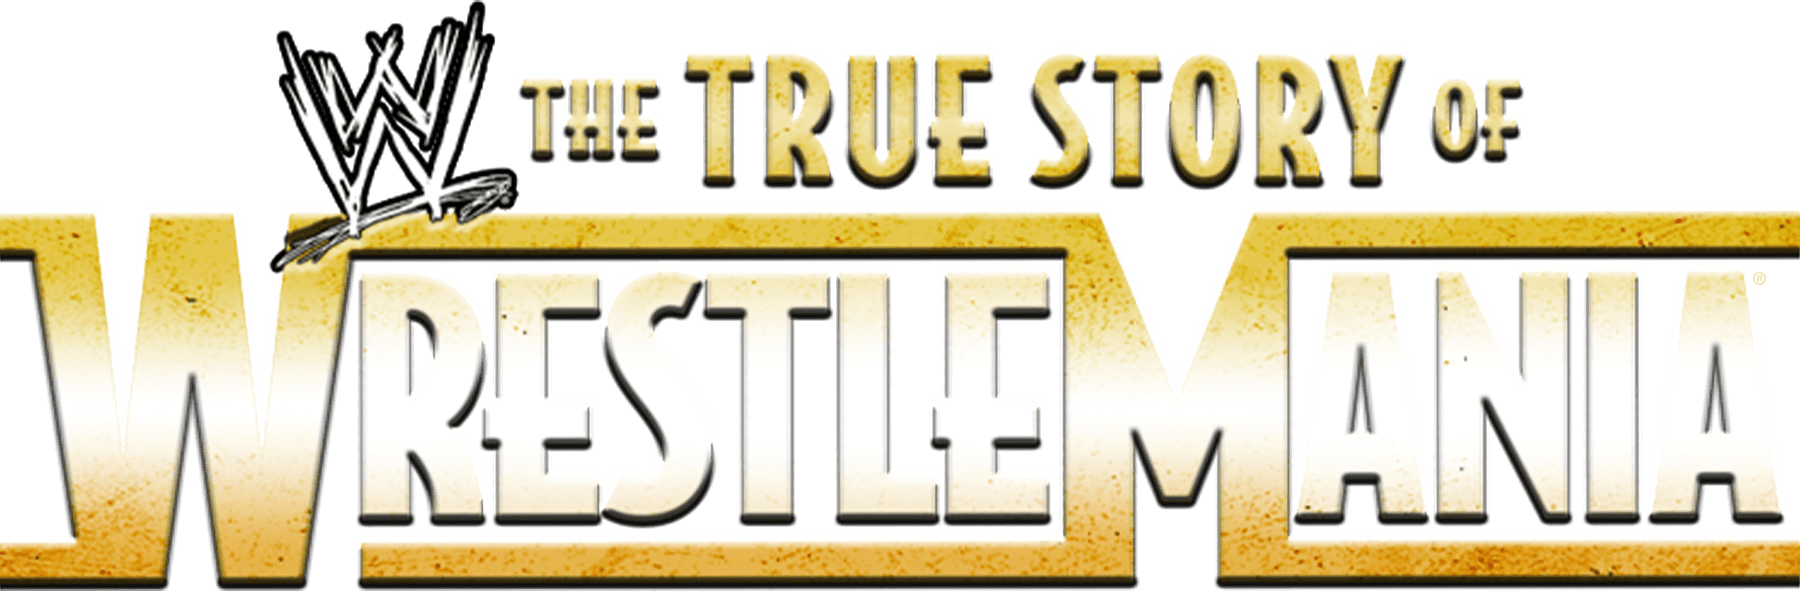 The True Story of WrestleMania logo